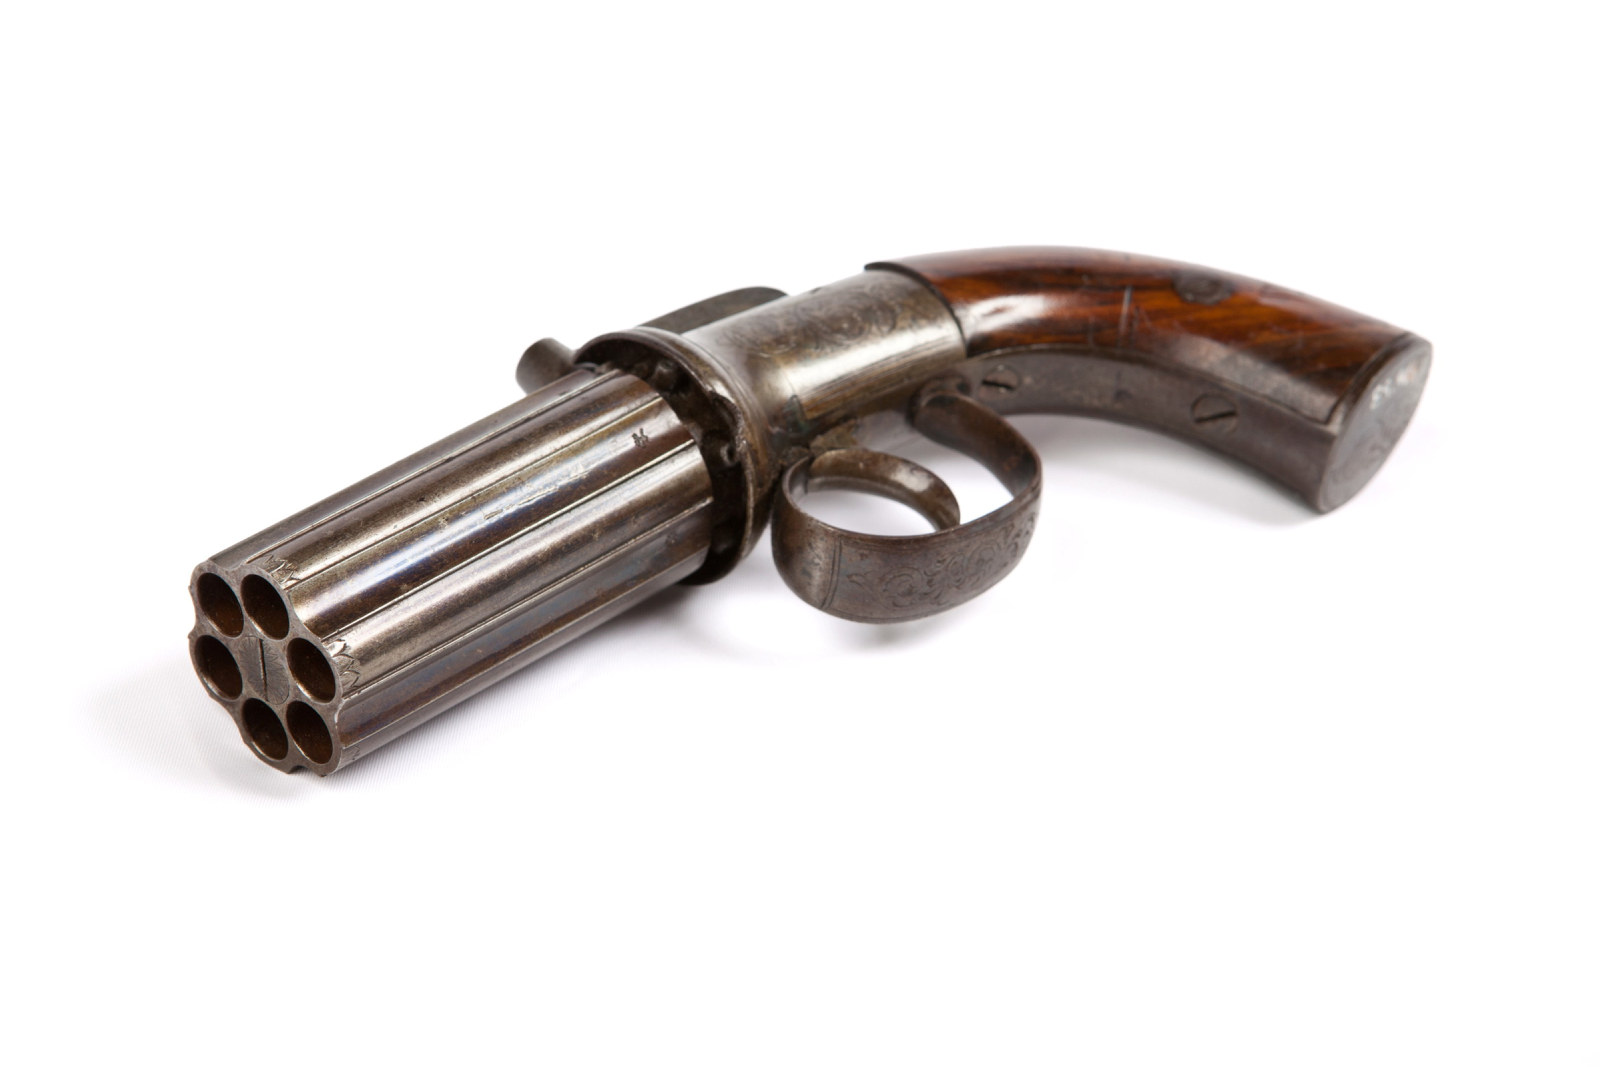 Multi-barrel pepper box pistol